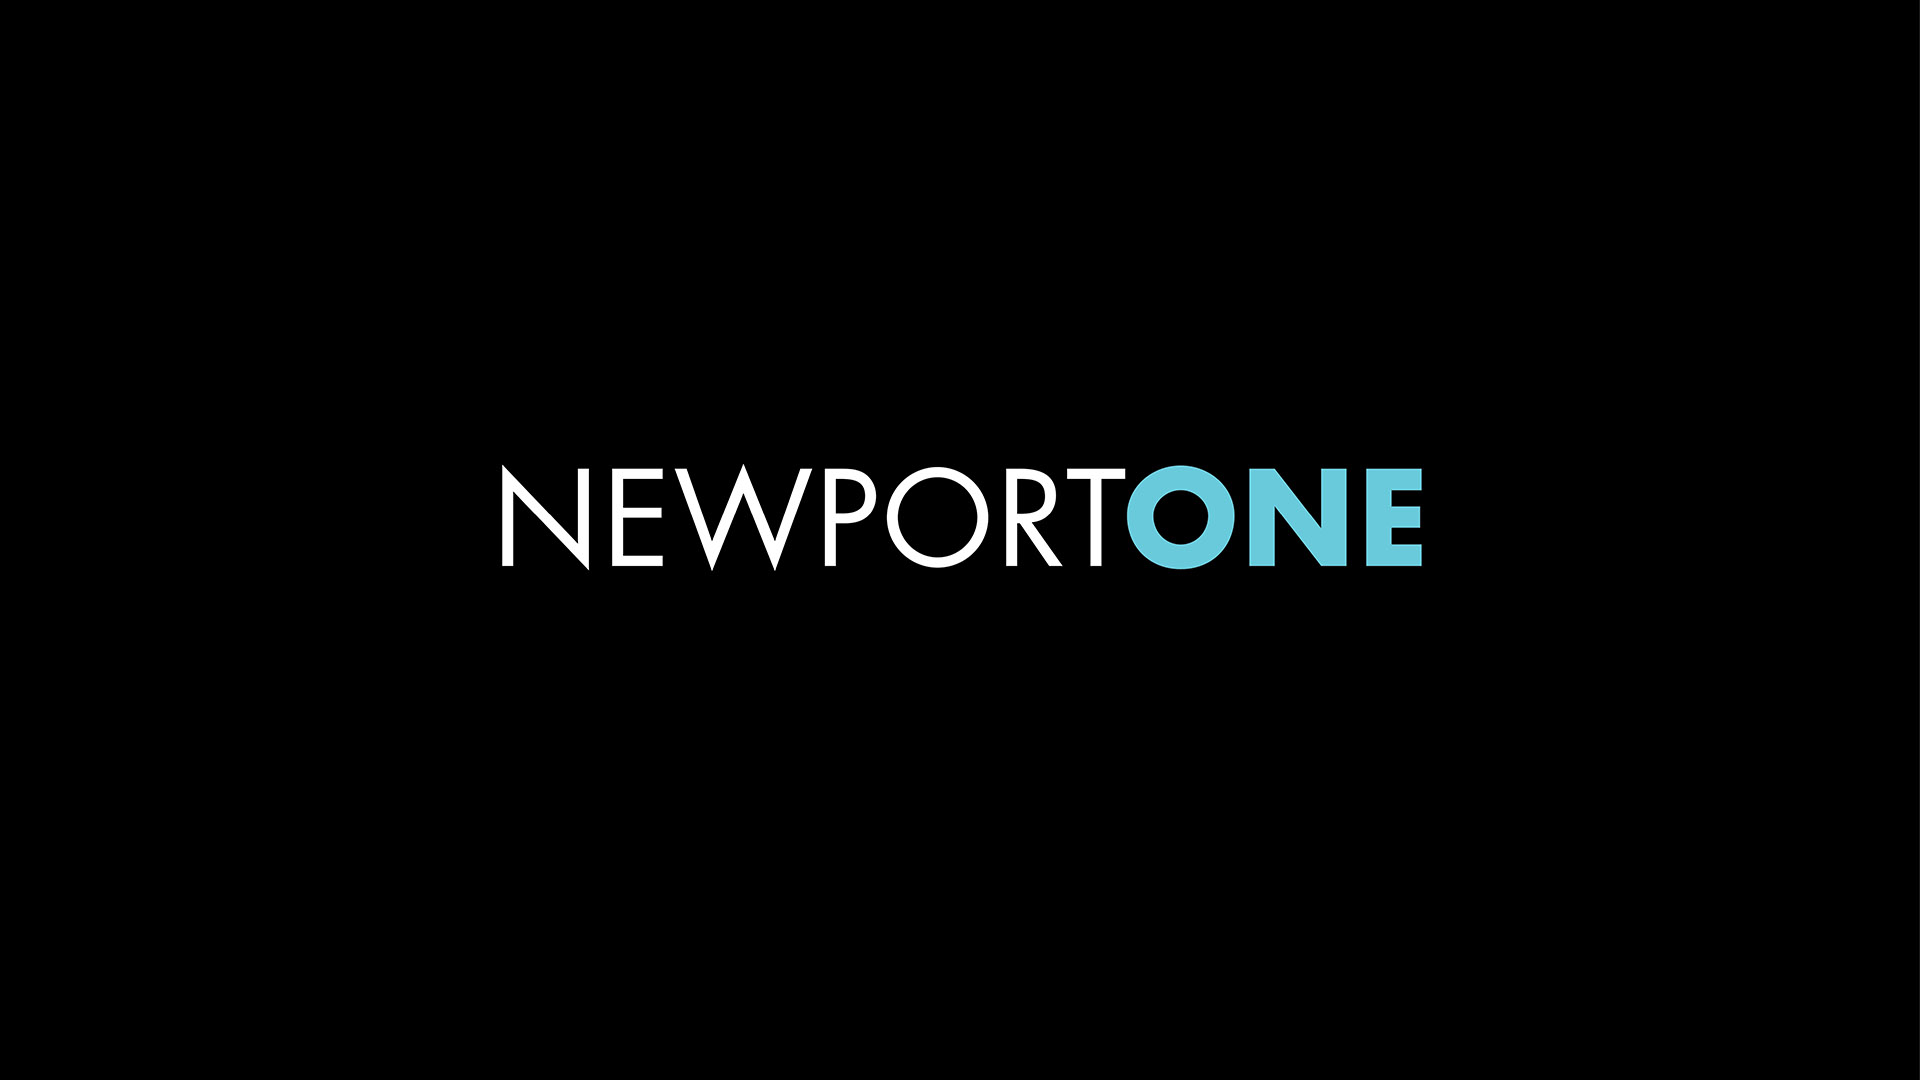 newport one logo on black